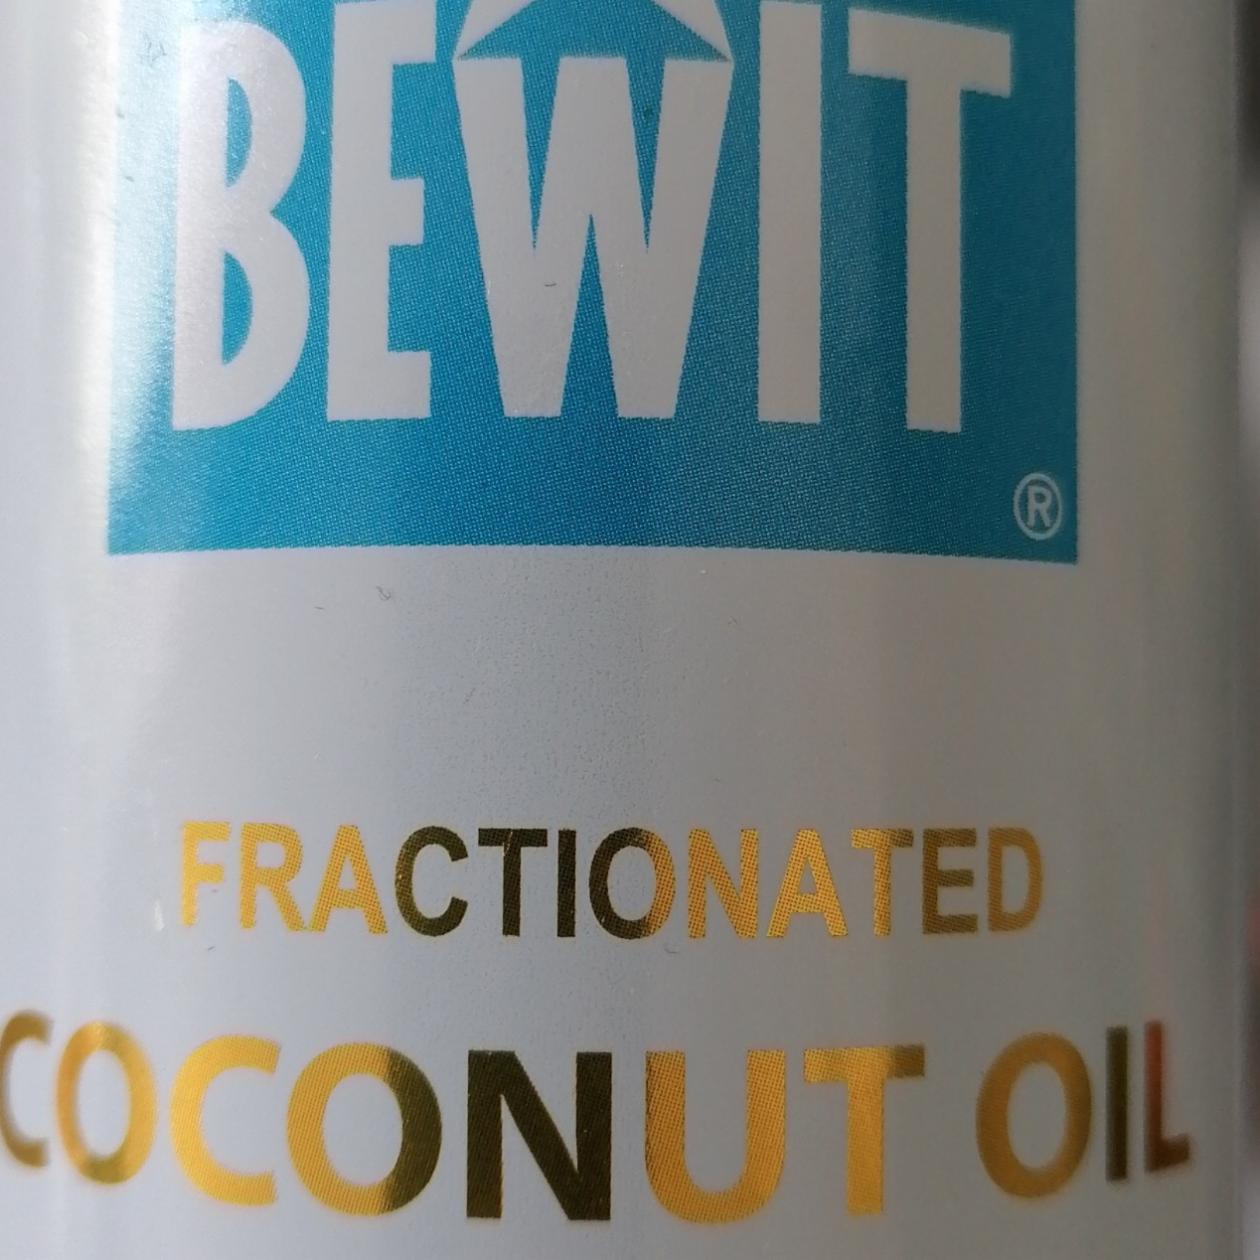 Fotografie - Coconut oil fractionated Bewit